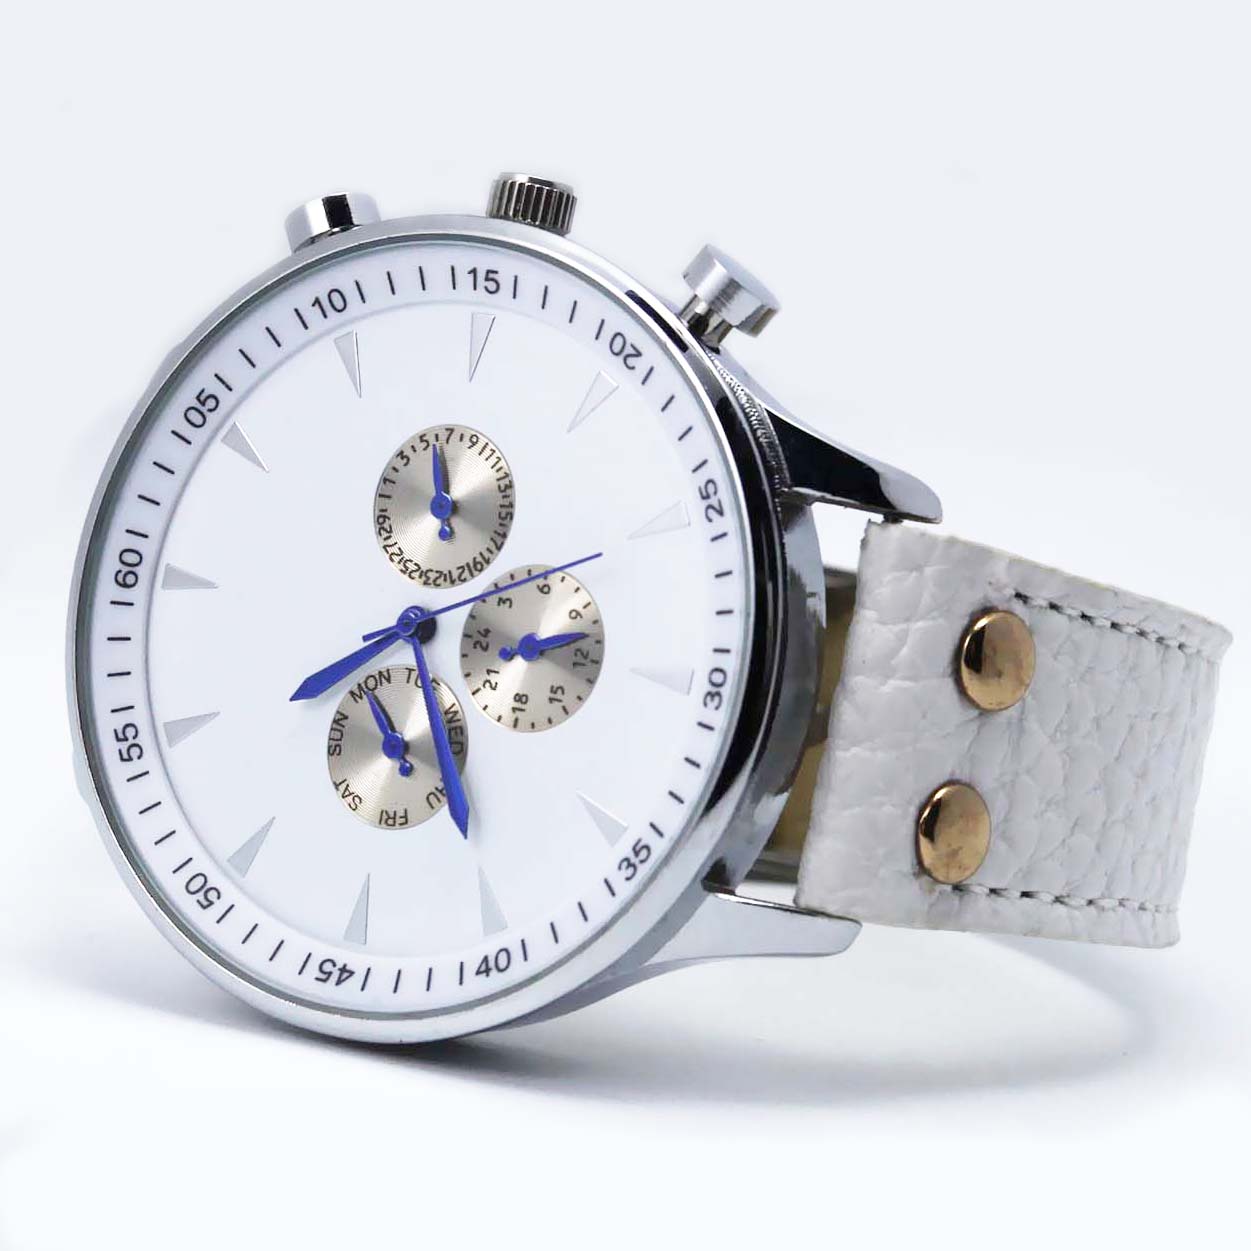 #02106Men's wristwatch quartz analog leather strap watch